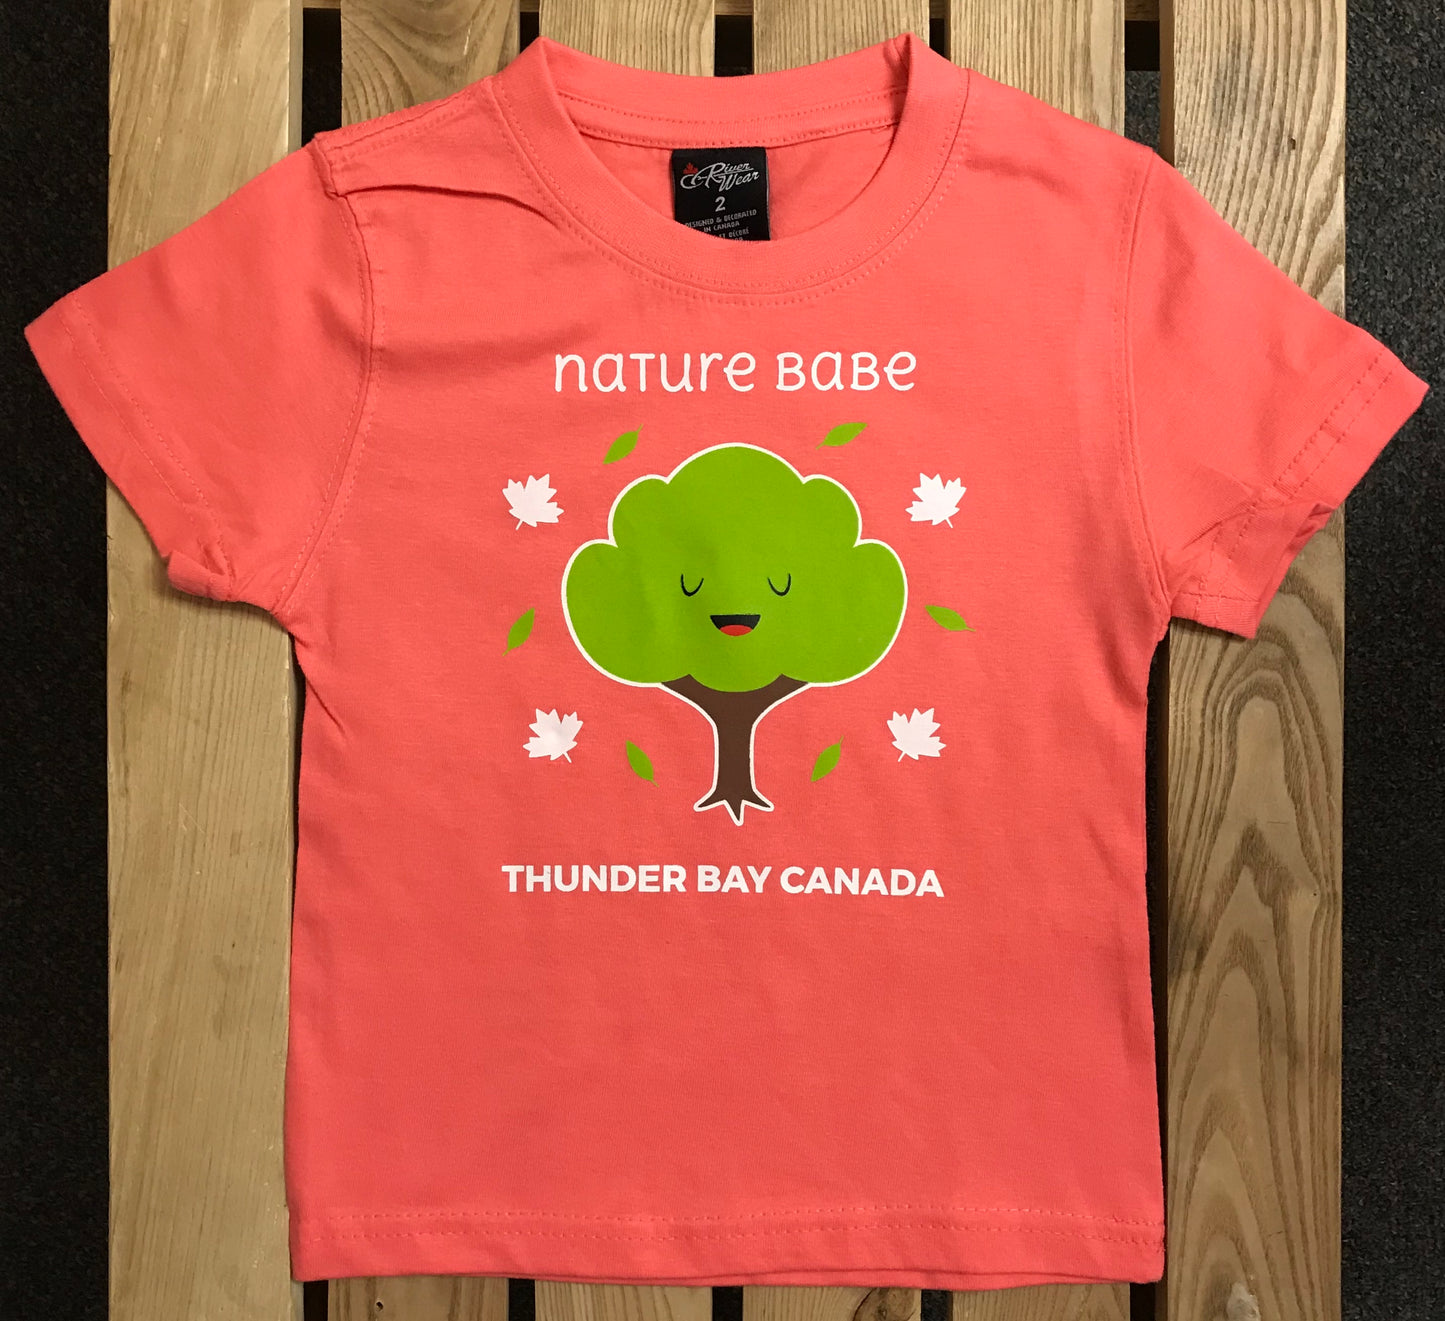 Kid's T-shirt - "Nature Babe", Thunder Bay, Canada - Salmon Pink